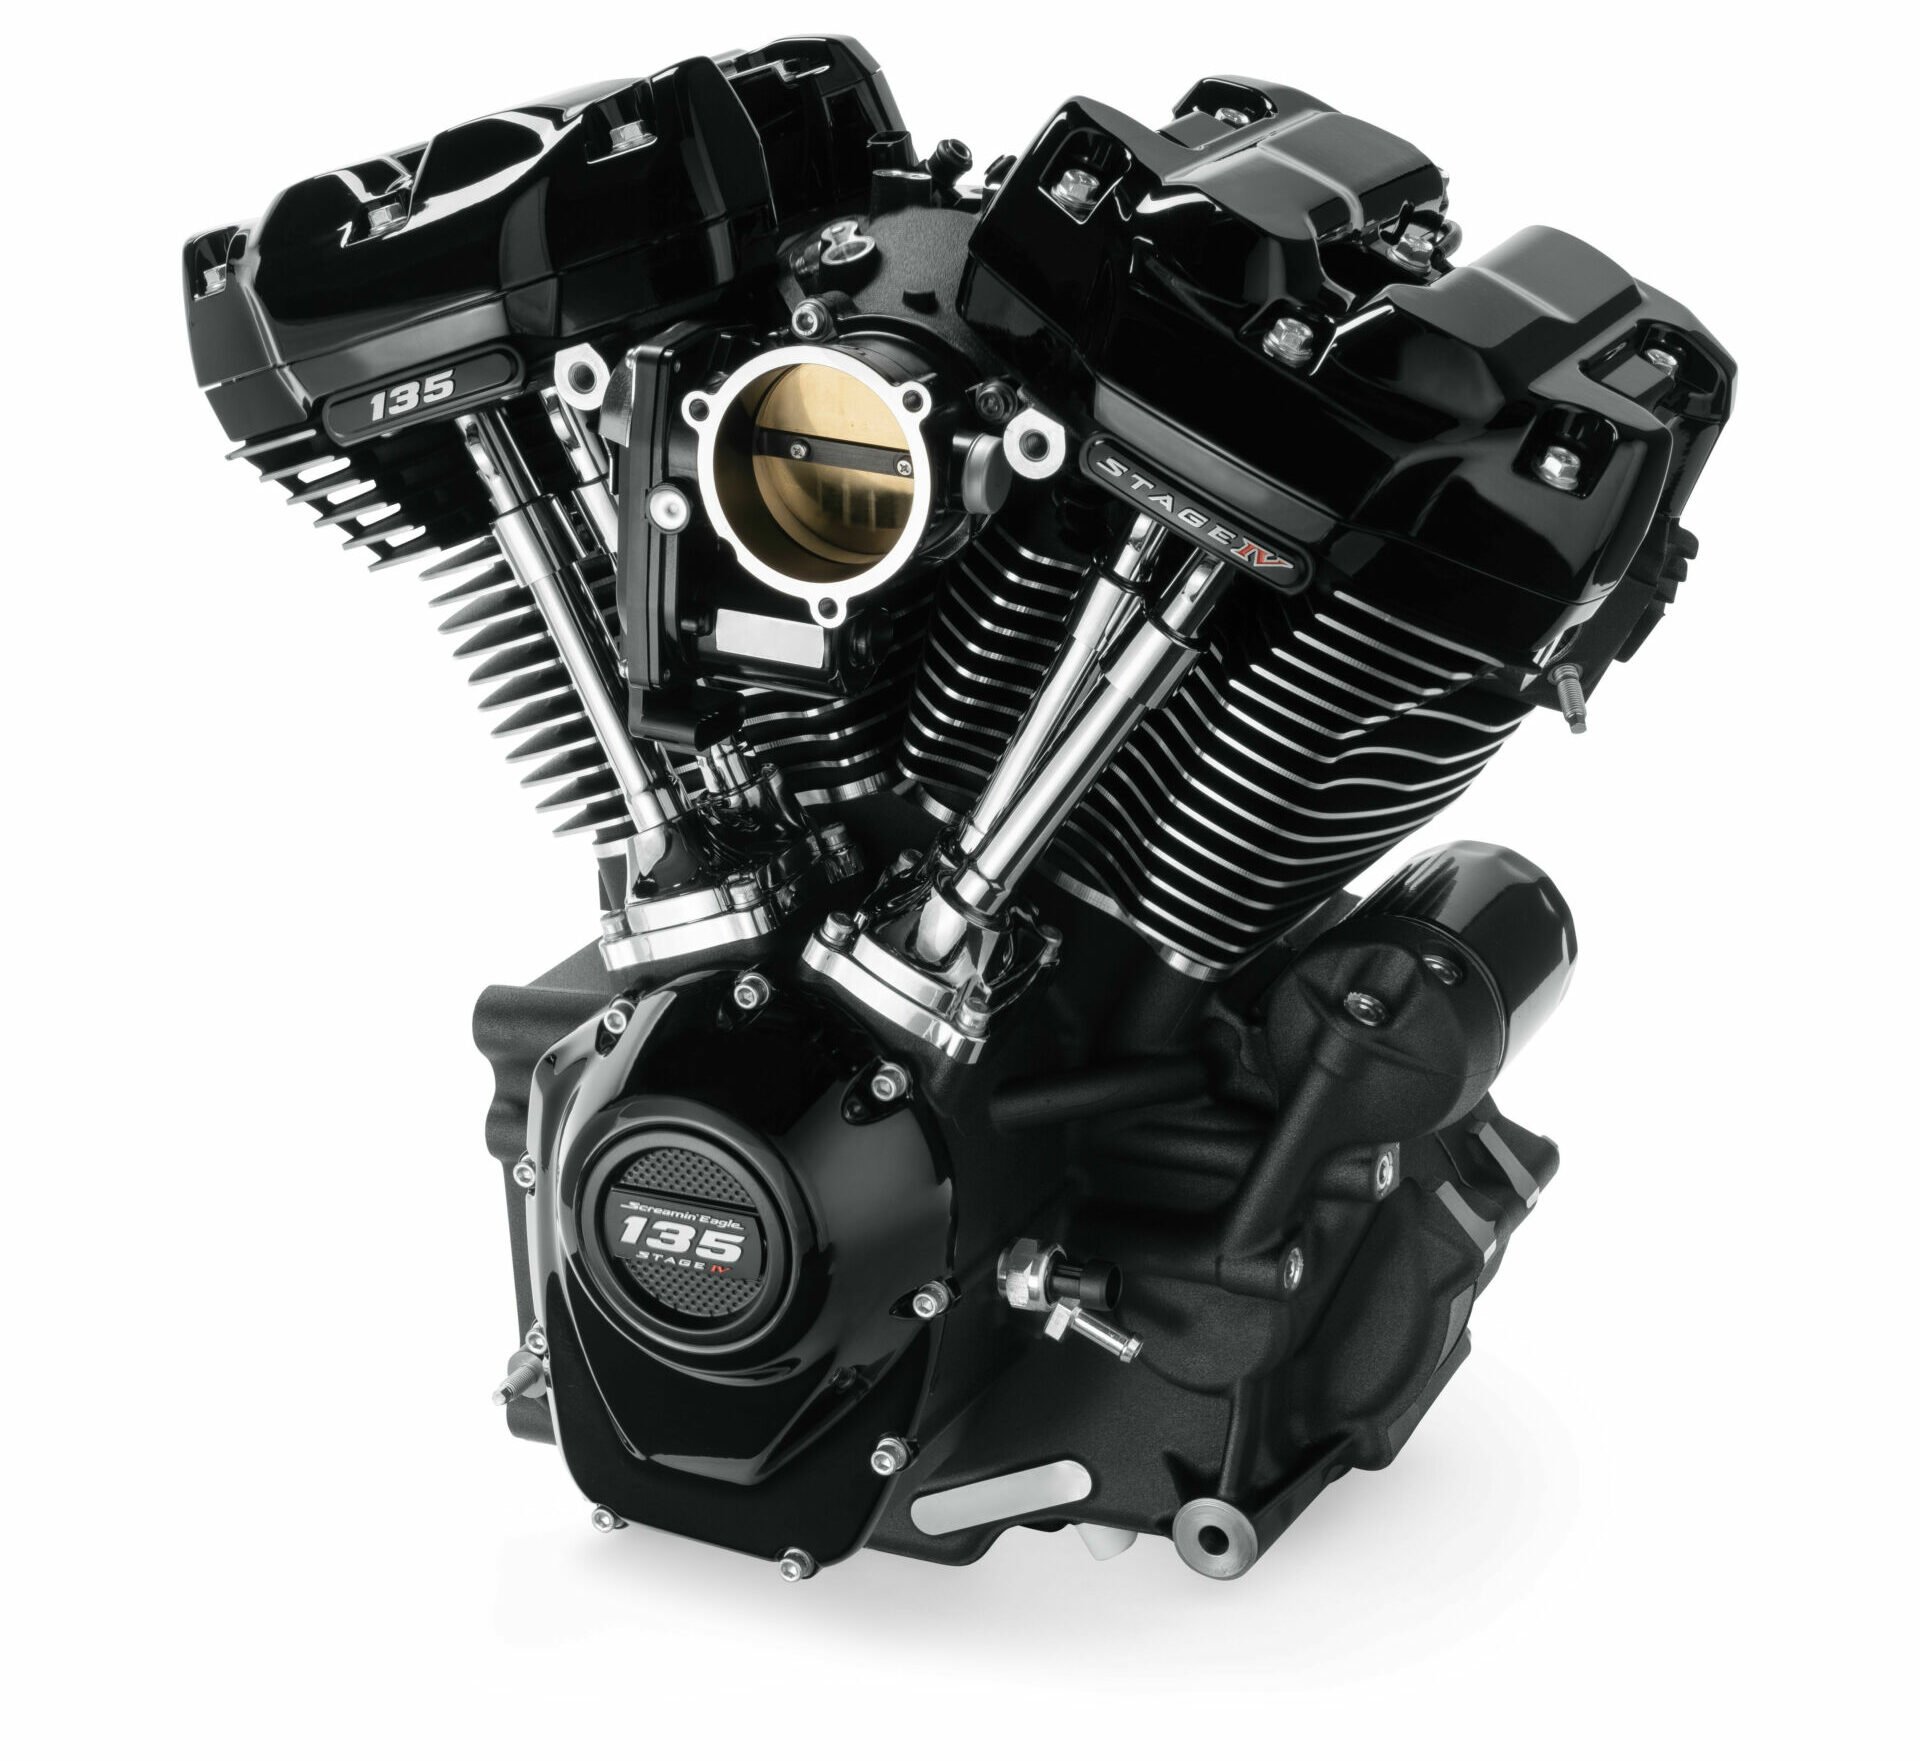 Harley-Davidson's new Screamin' Eagle 135ci Stage IV Performance Crate Engine. Photo courtesy Harley-Davidson.